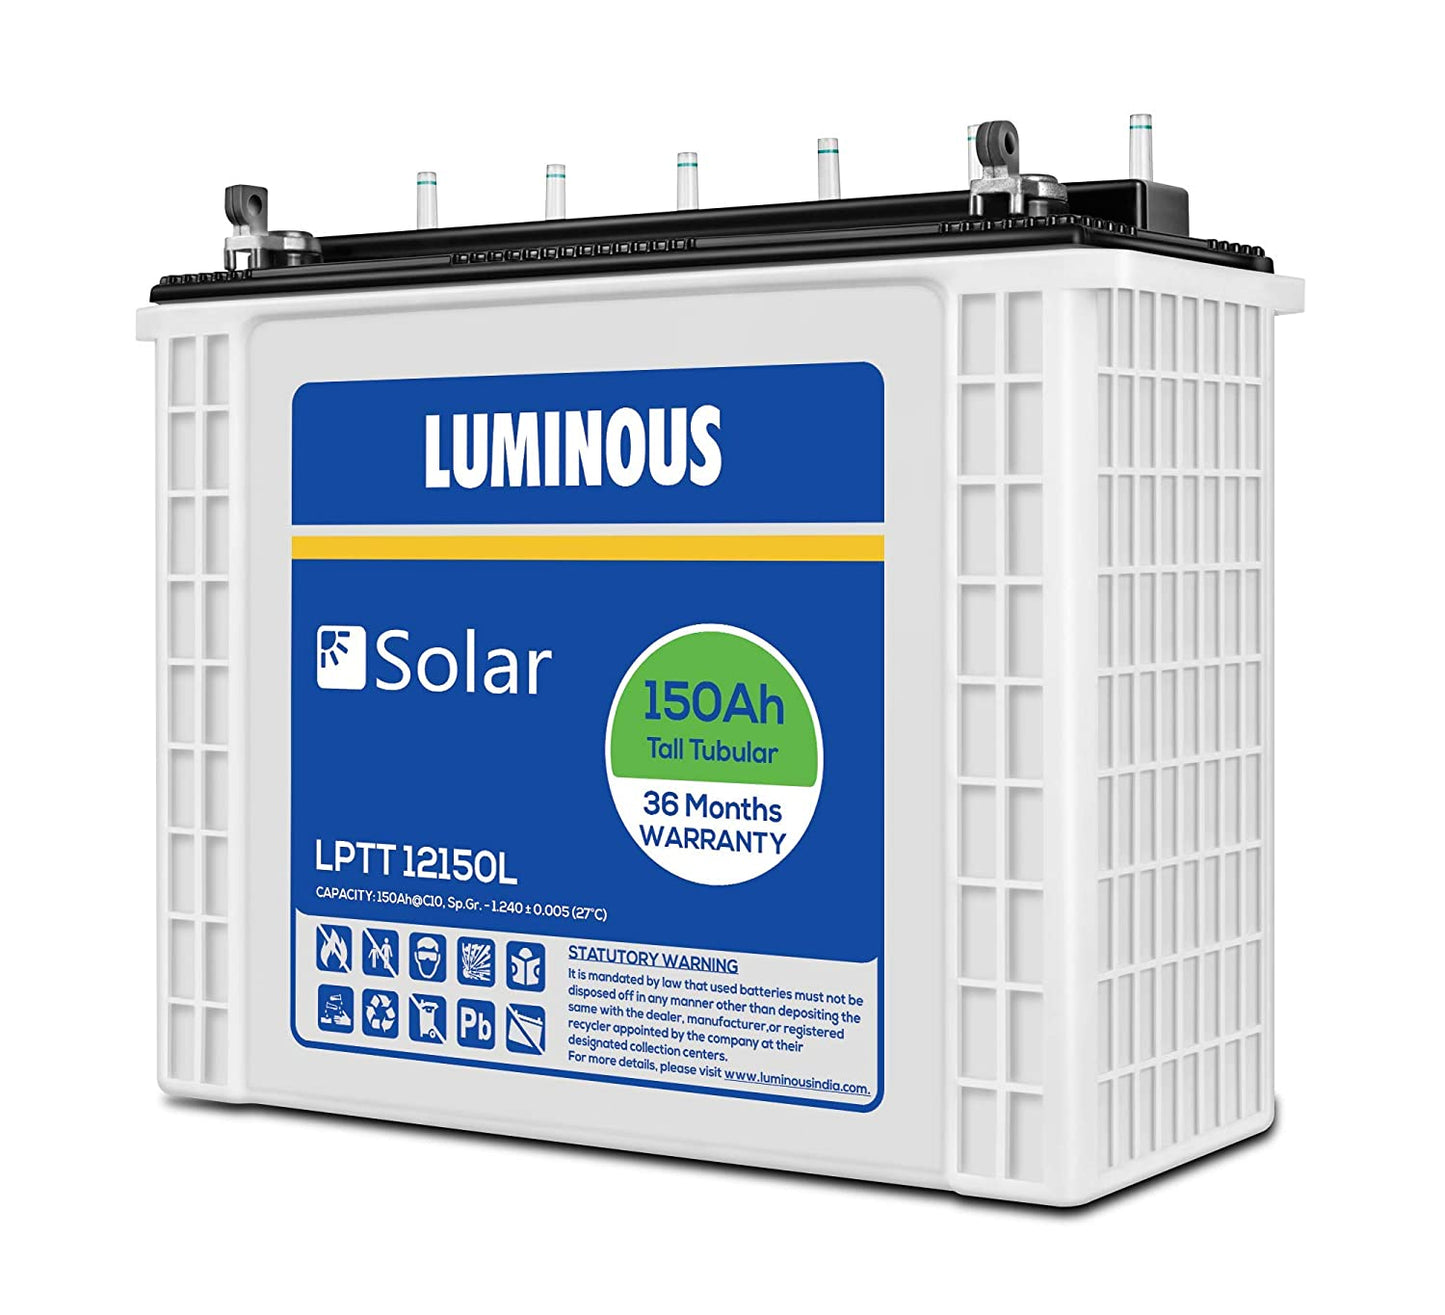 Luminous LPTT12150L Solar Tall Tubular Inverter Battery 150AH 36 Months Warranty